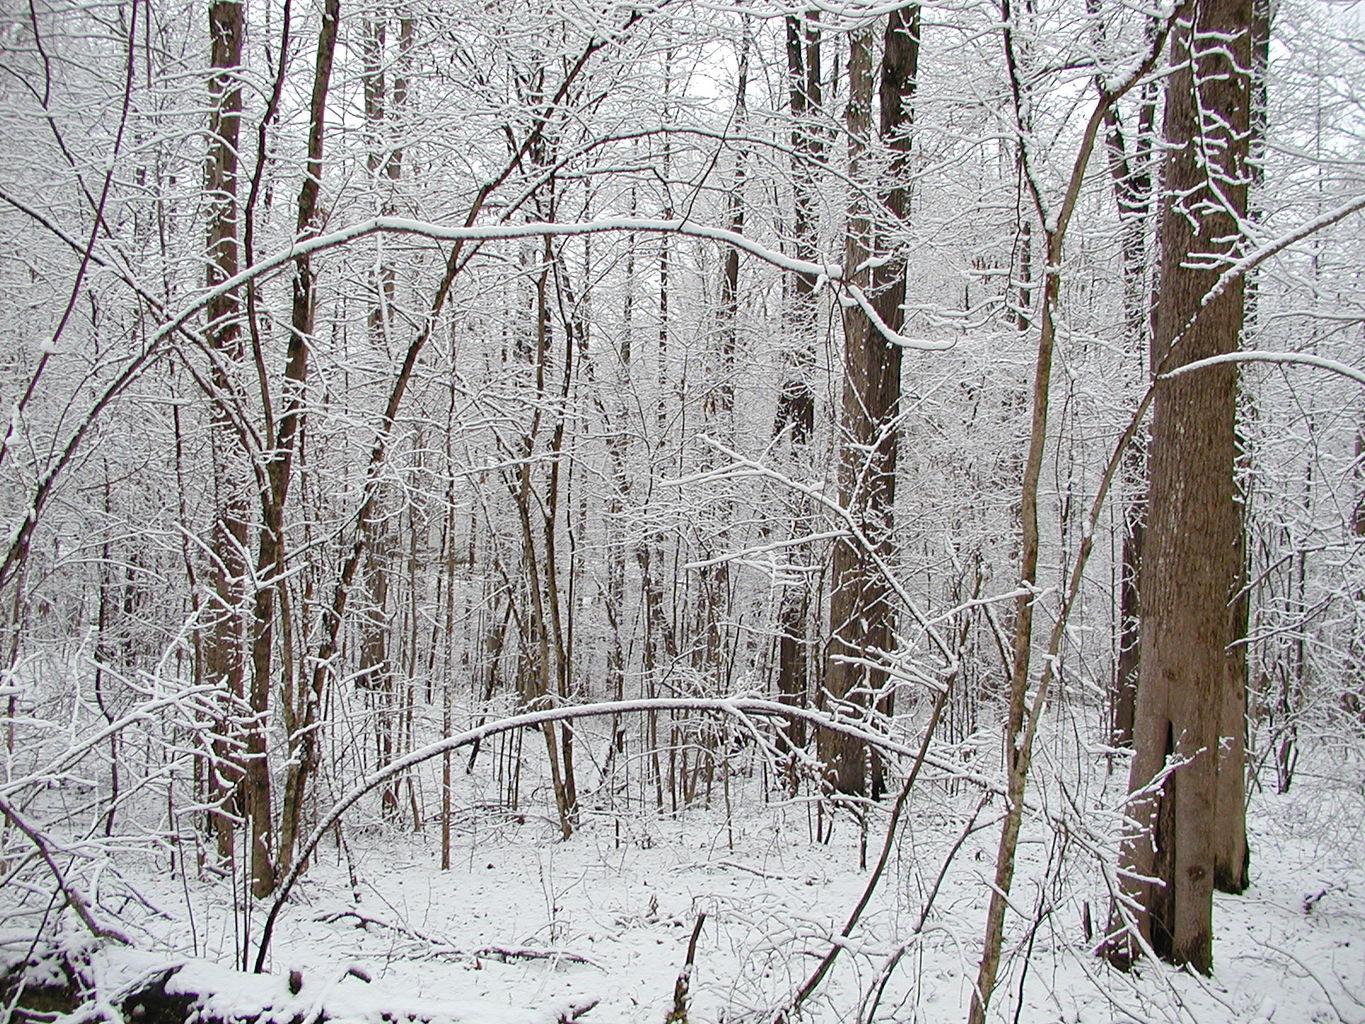 Snow - February 2004
